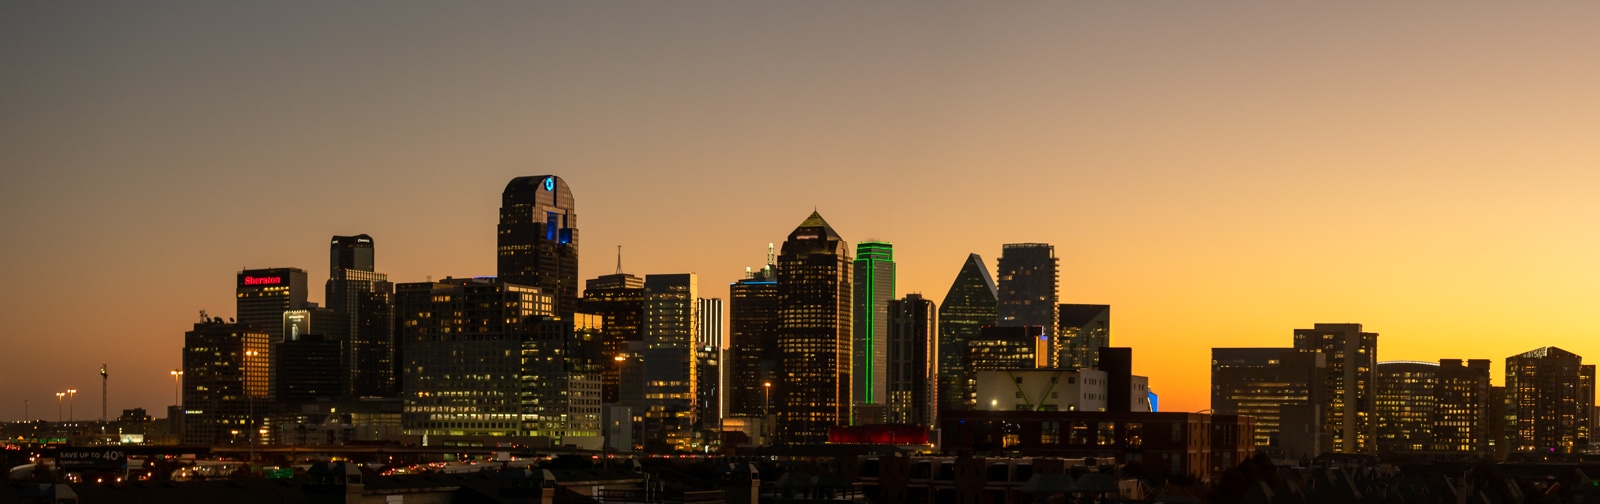 Downtown Dallas panorama at sunset